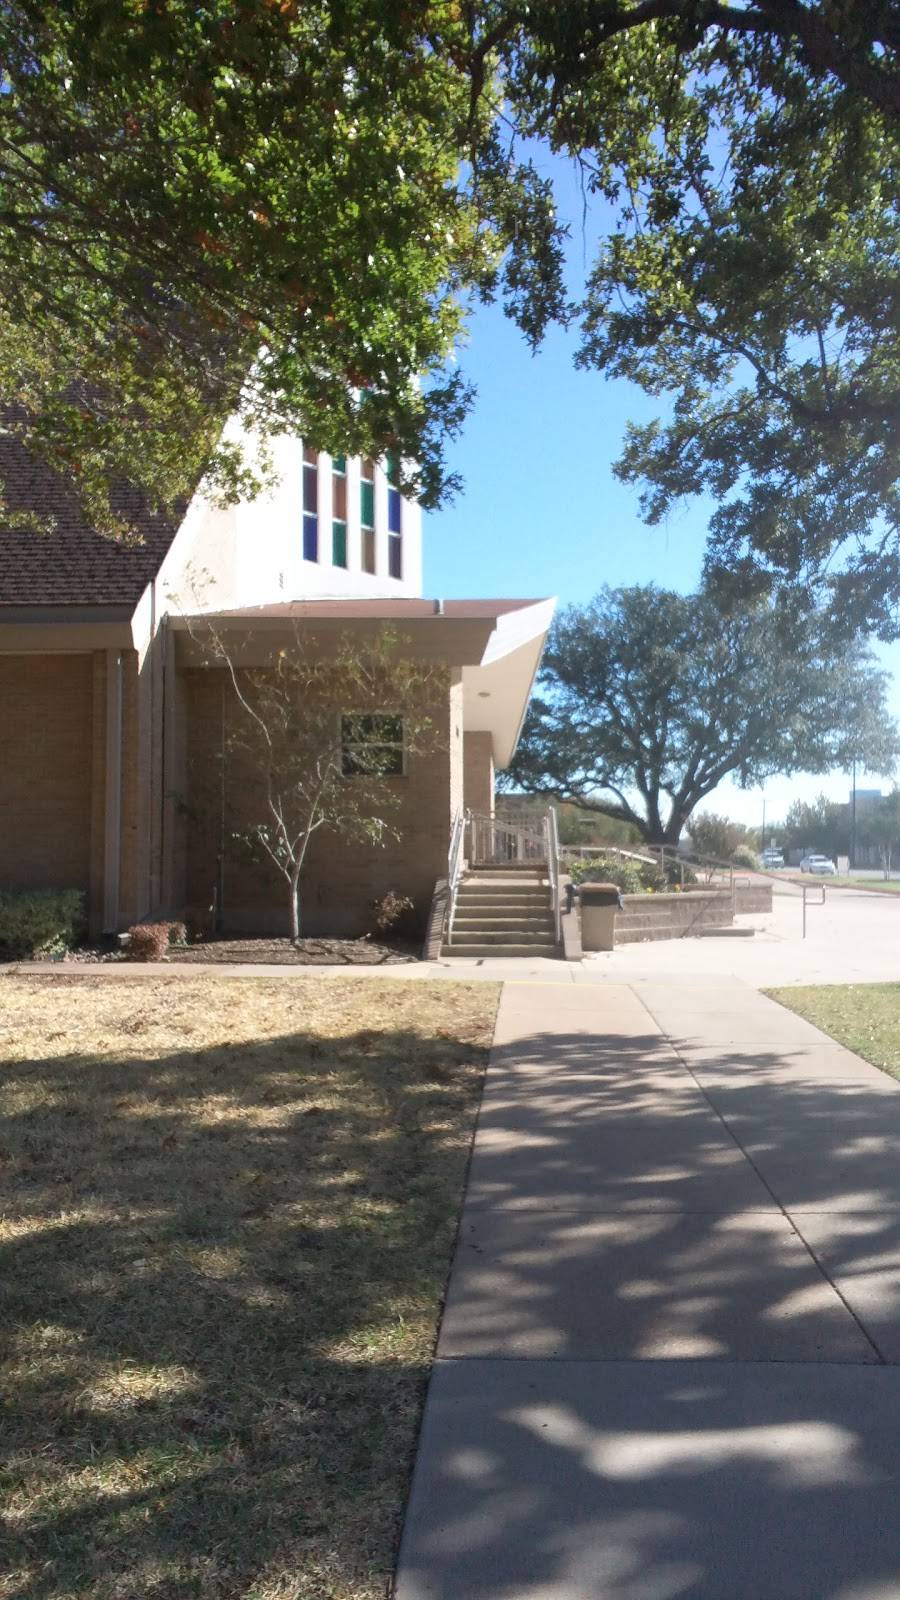 St. John The Apostle Catholic Church | 7341 Glenview Dr, North Richland Hills, TX 76180, USA | Phone: (817) 284-4811